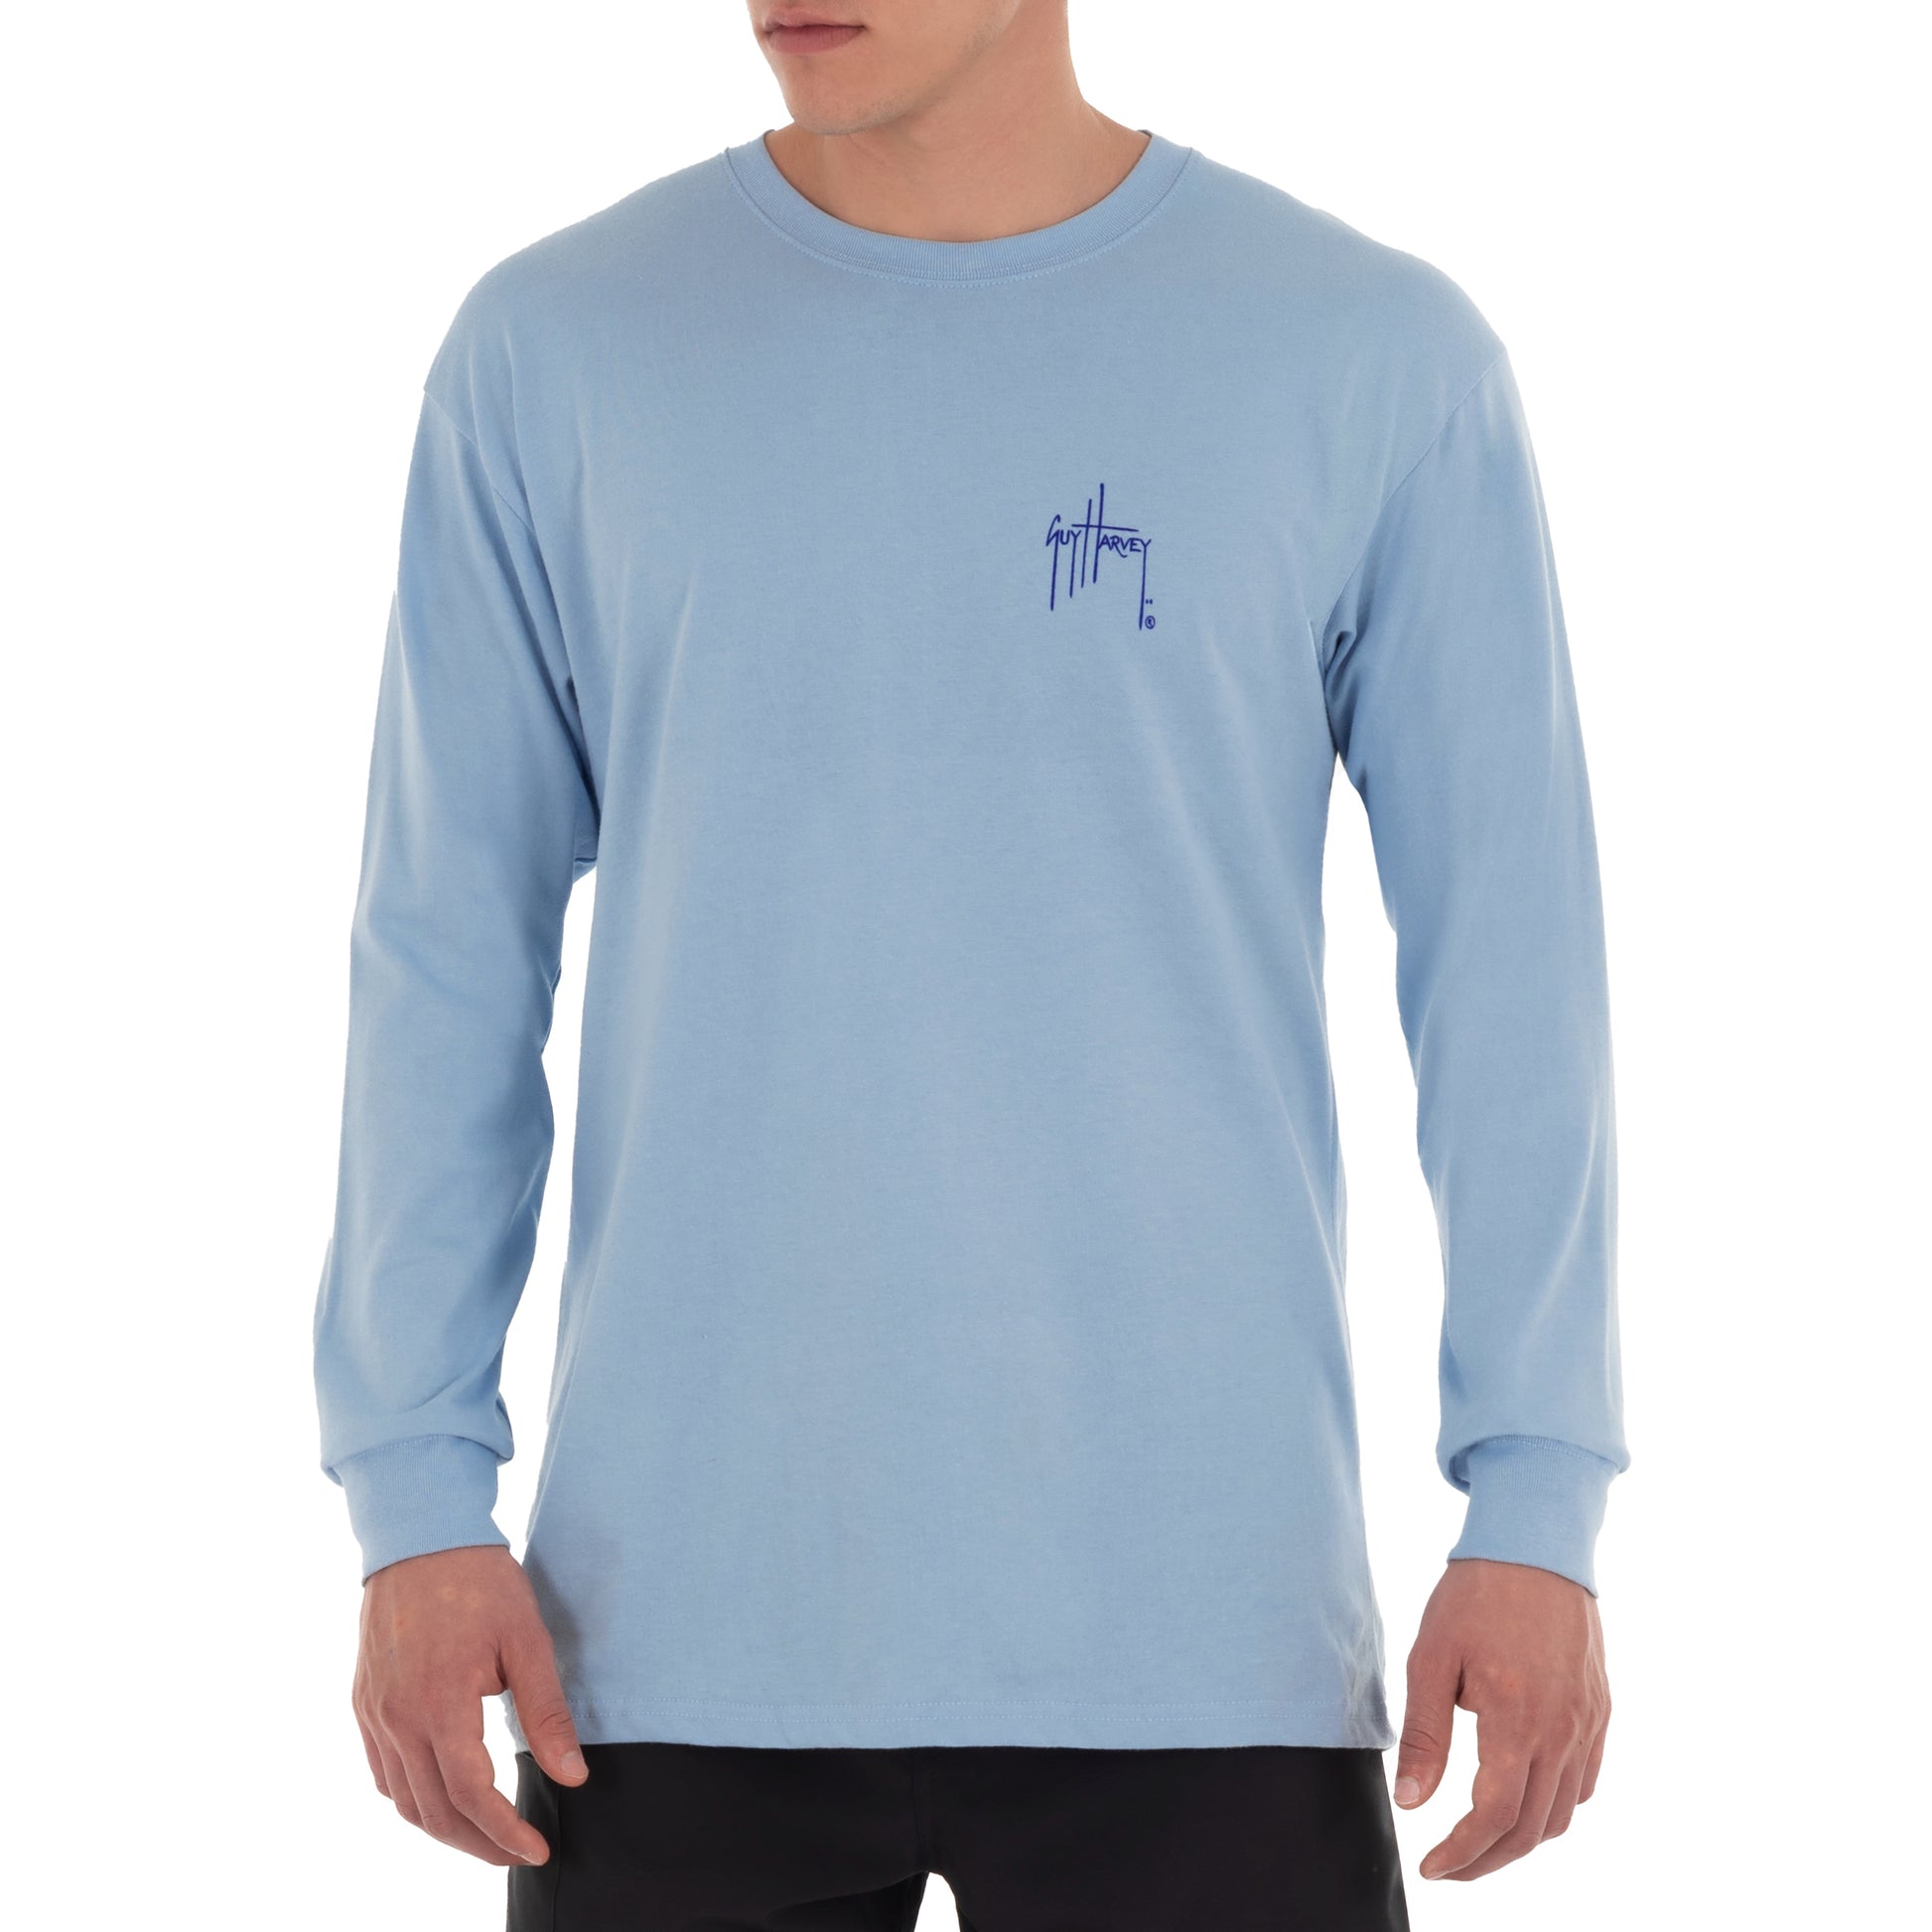 Men's Diamond Edge Long Sleeve Blue T-Shirt View 5